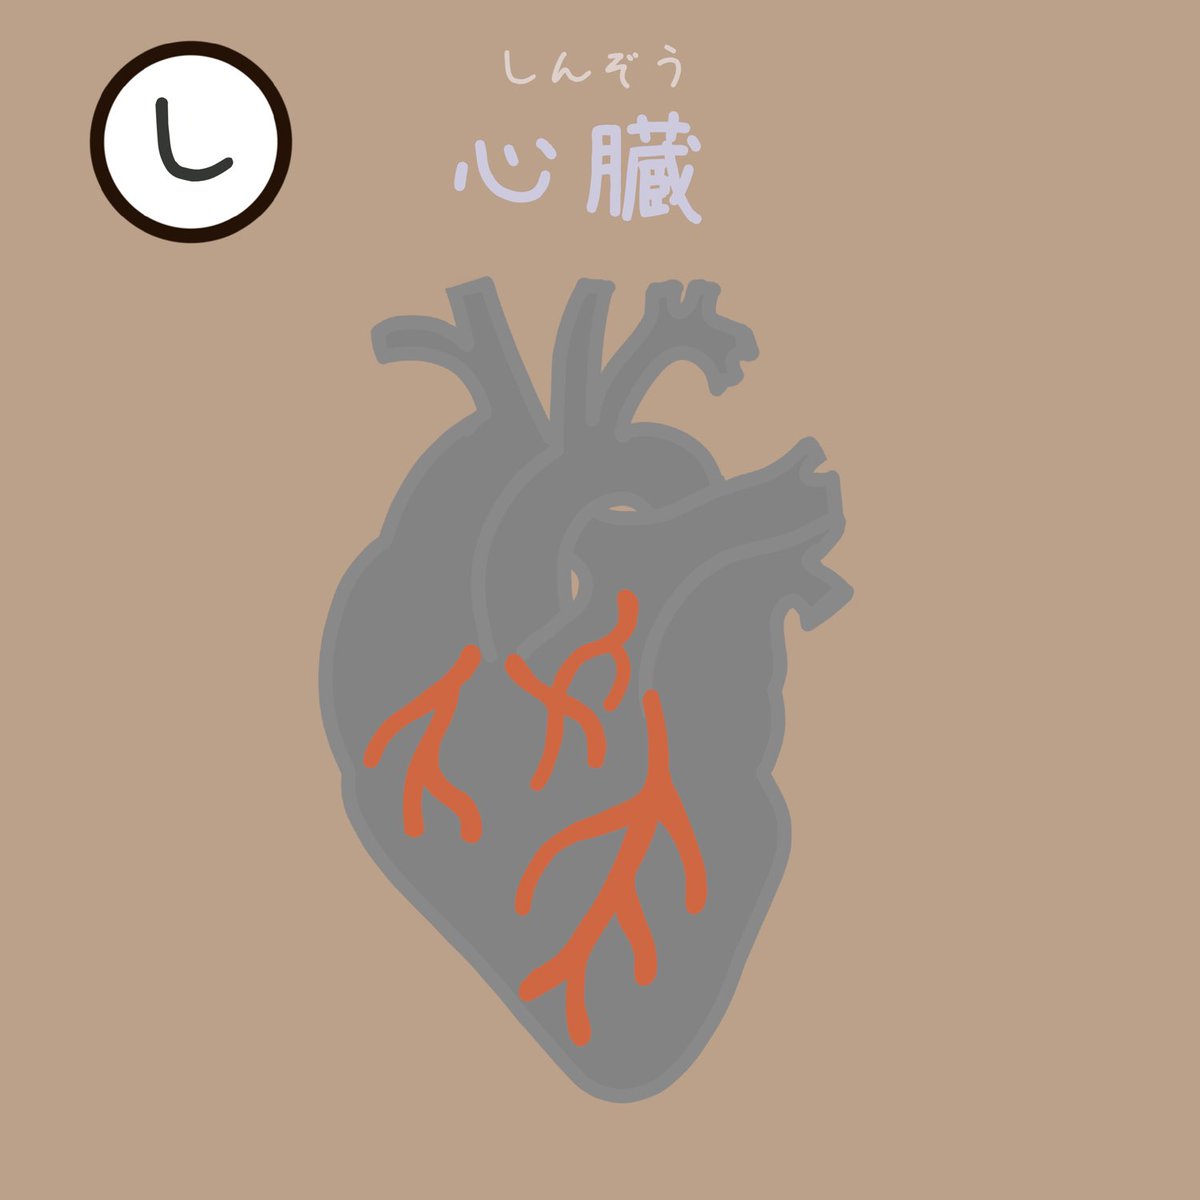 Joji 解剖学カルタ 心臓 心臓 解剖学 内臓 イラスト